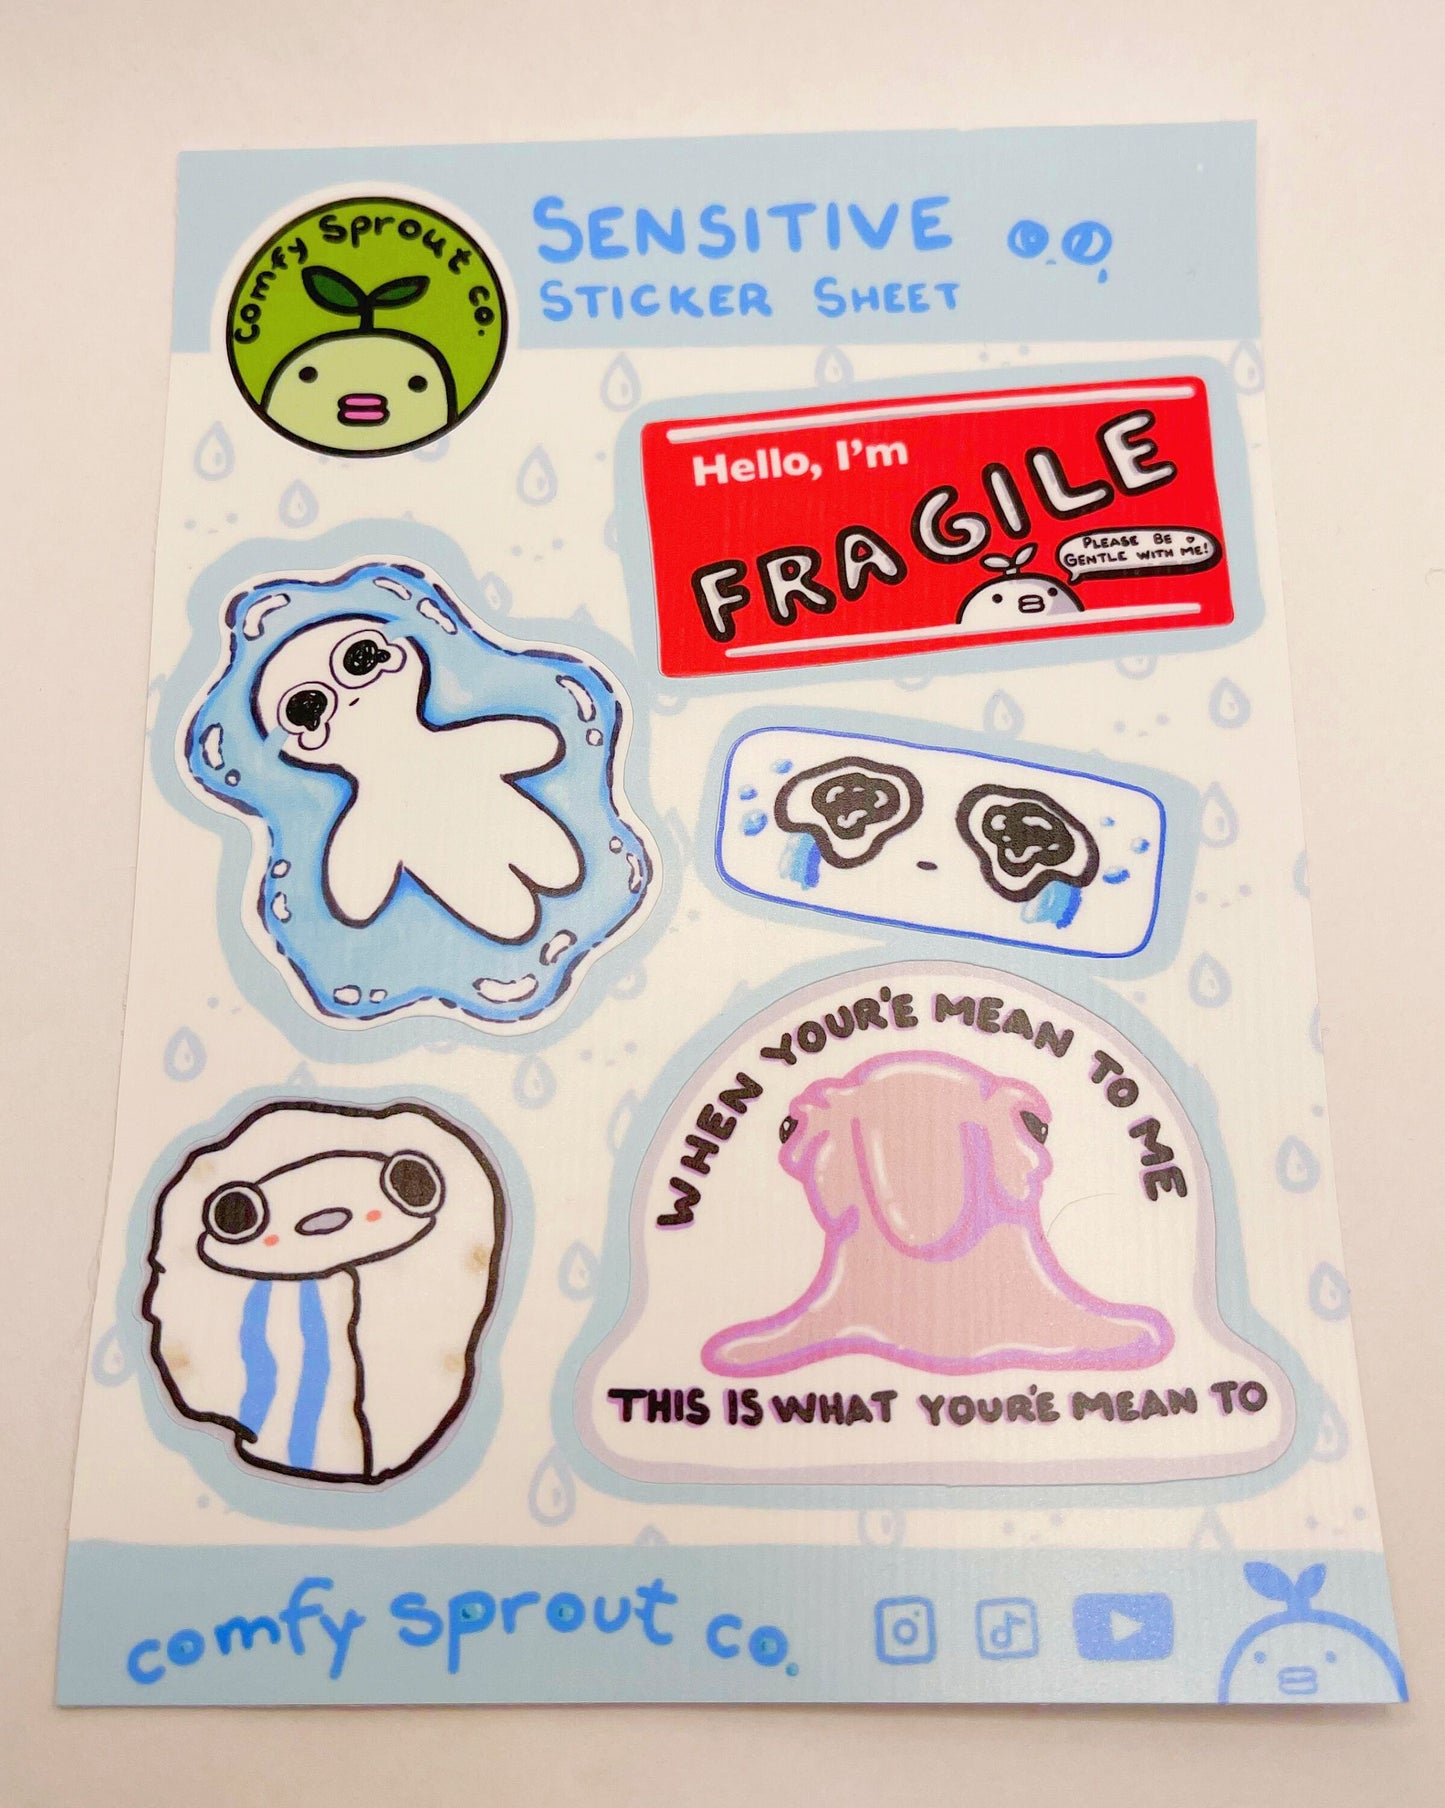 I'm Sensitive Sticker Sheet